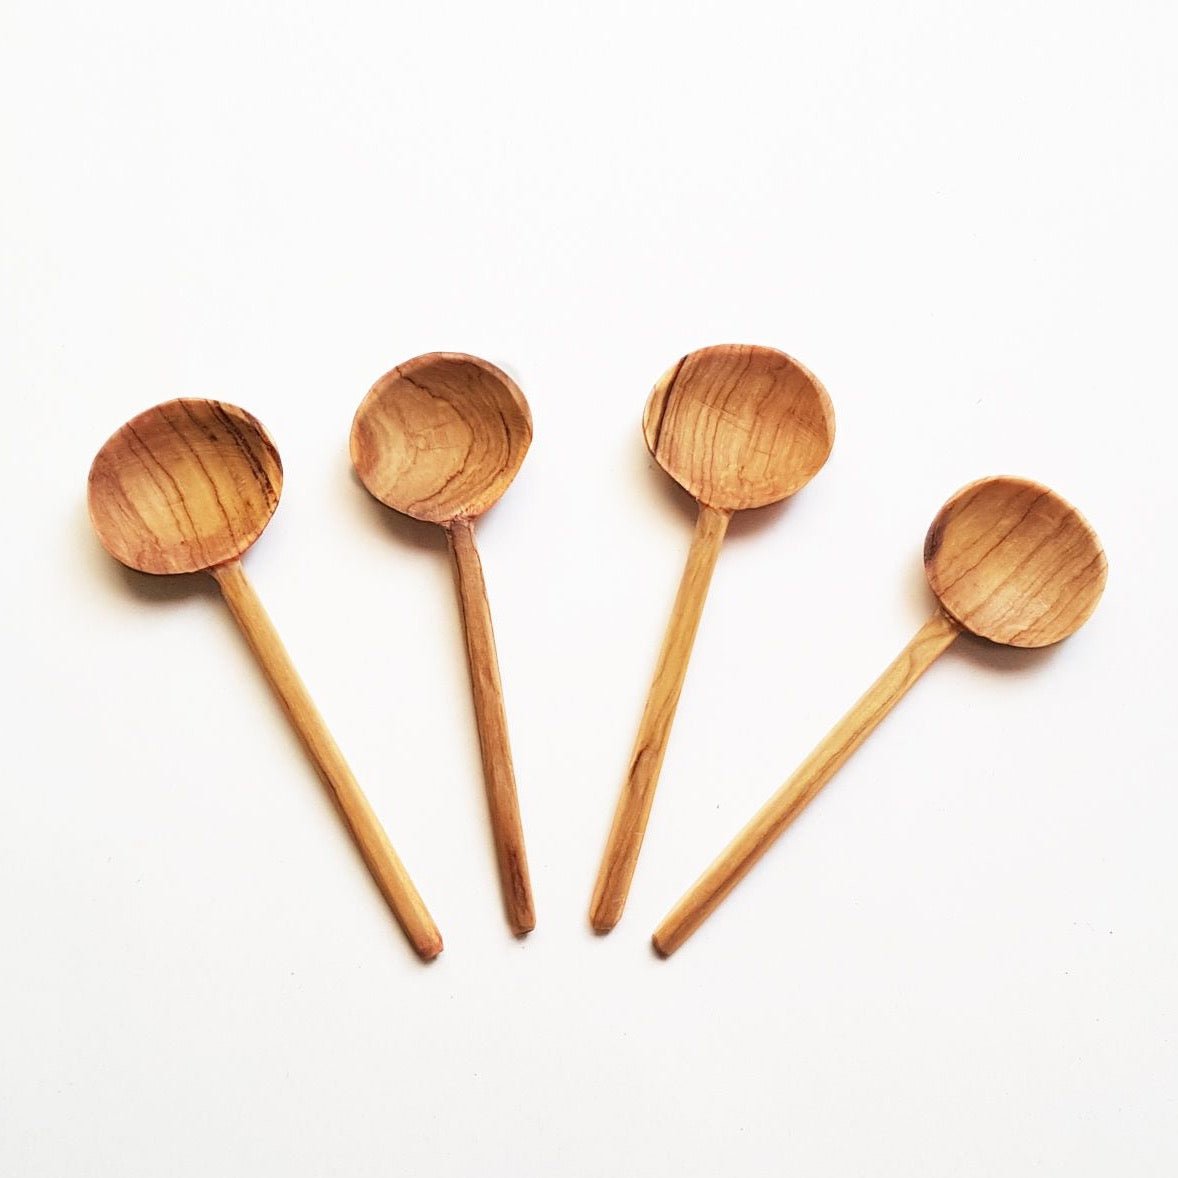 Measuring Spoon Set - Fair Trade Guatemalan Wood Items